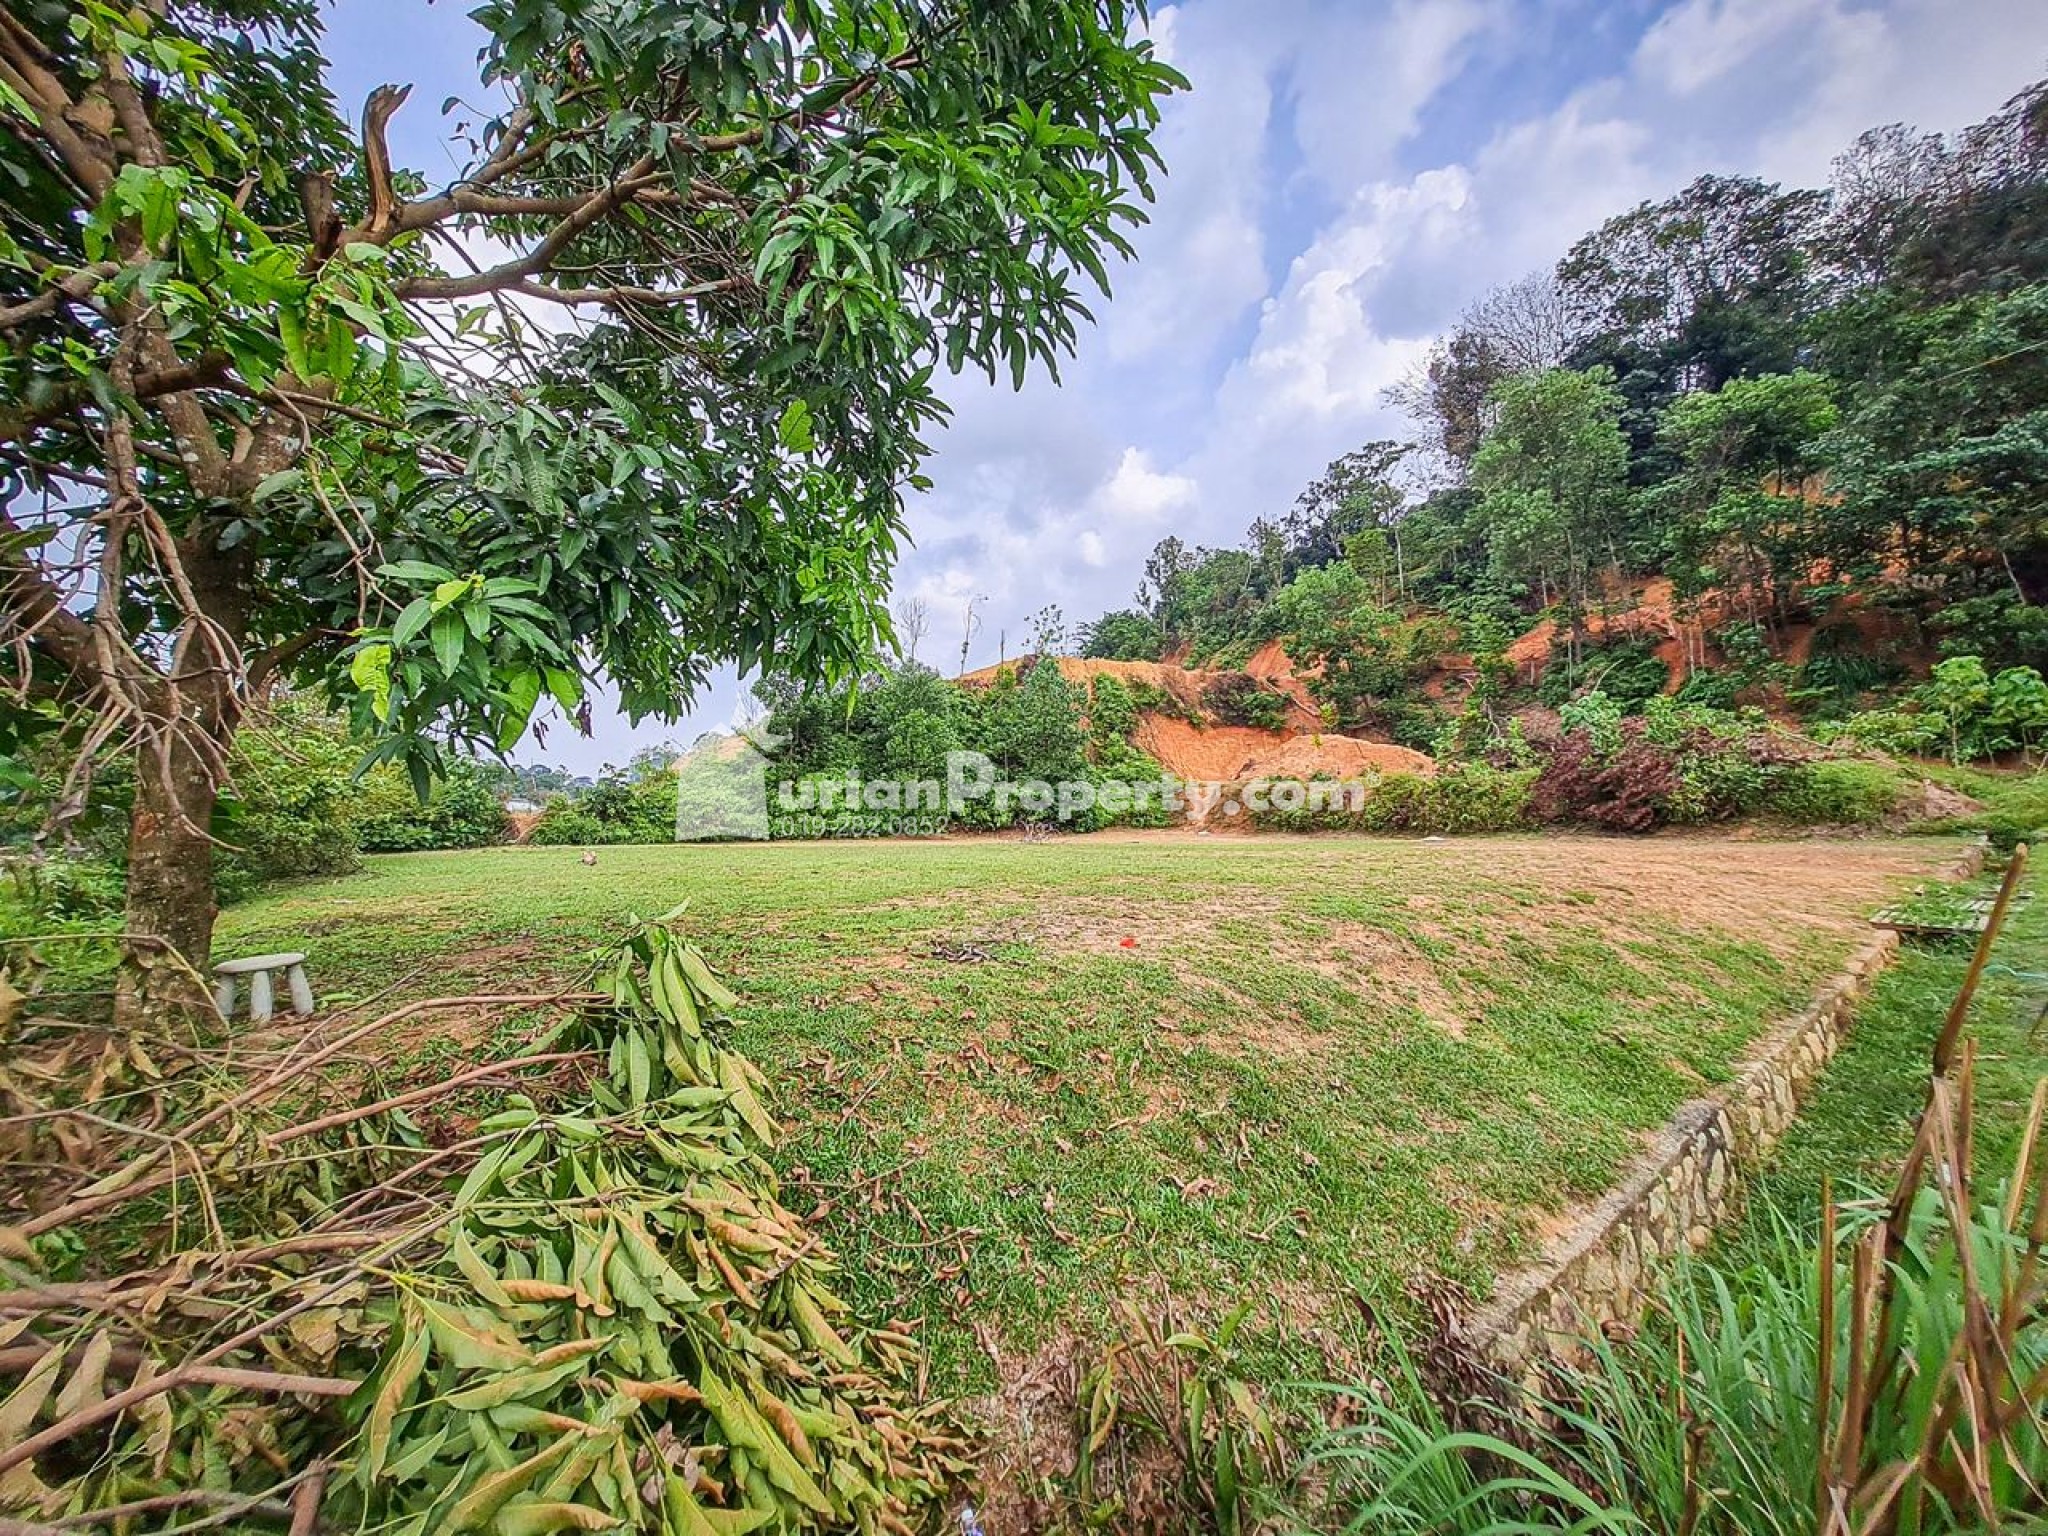 Residential Land For Sale at Kampung Sungai Merab